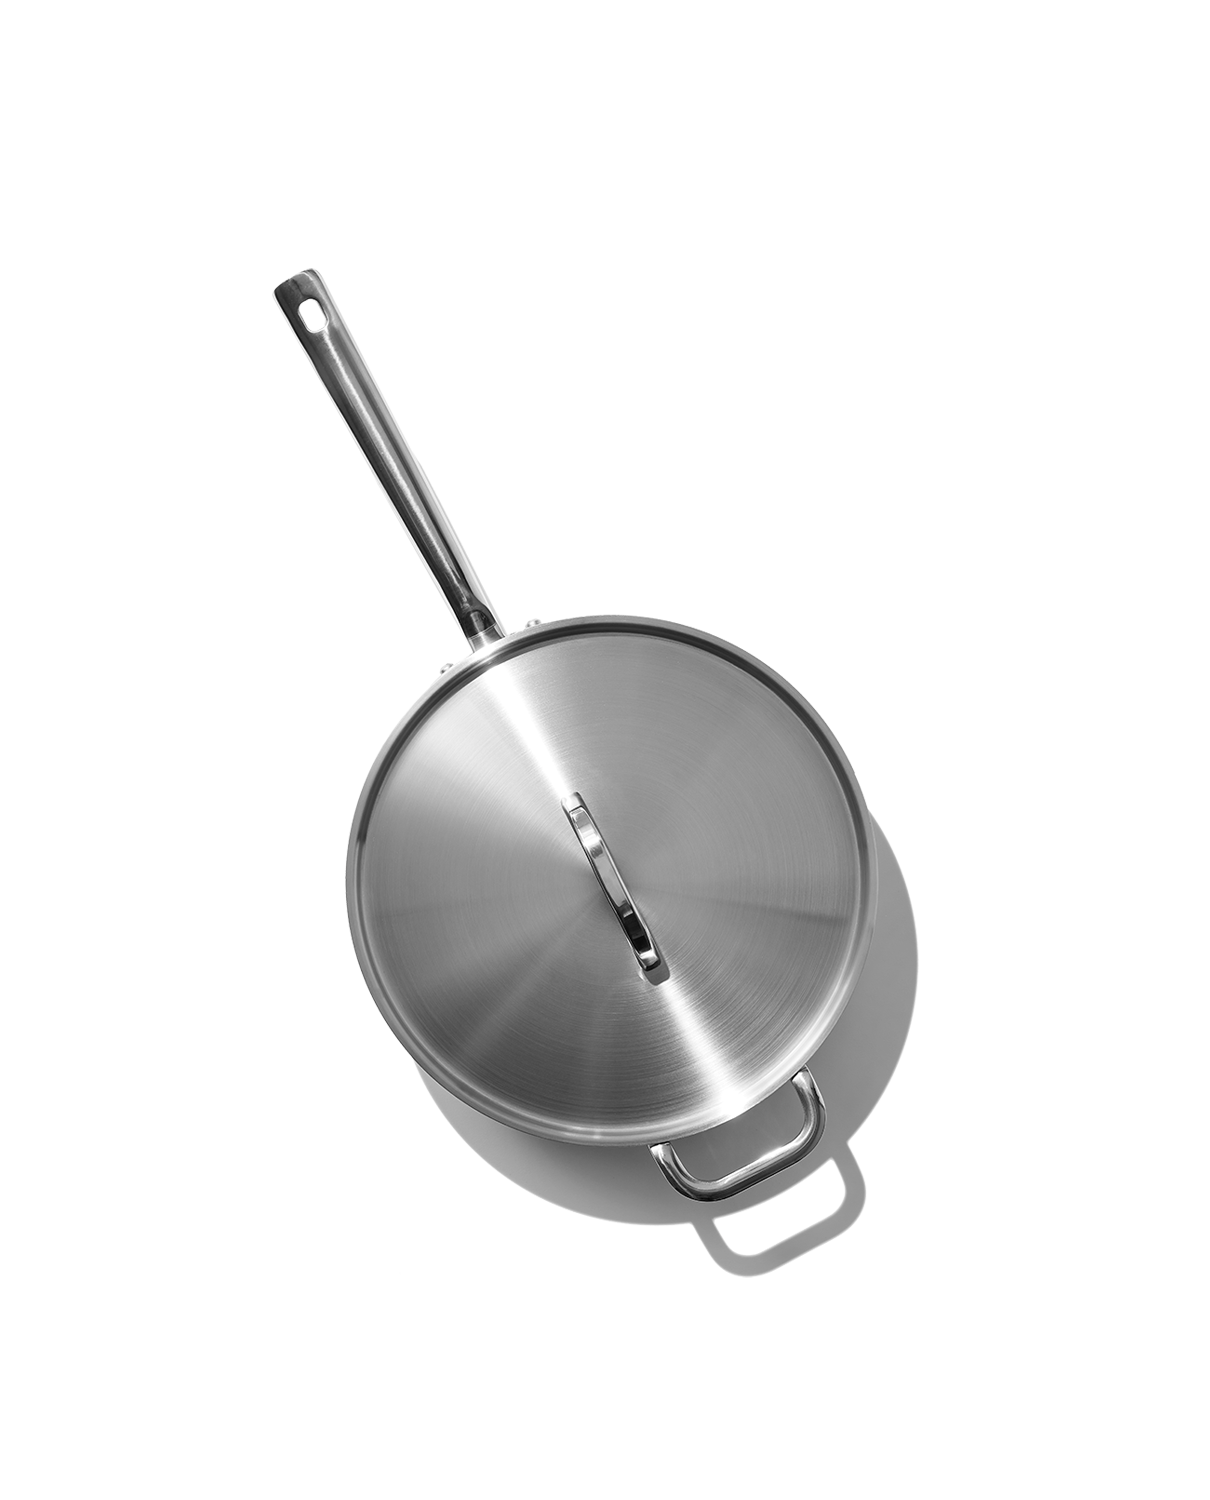 The Saute Pan